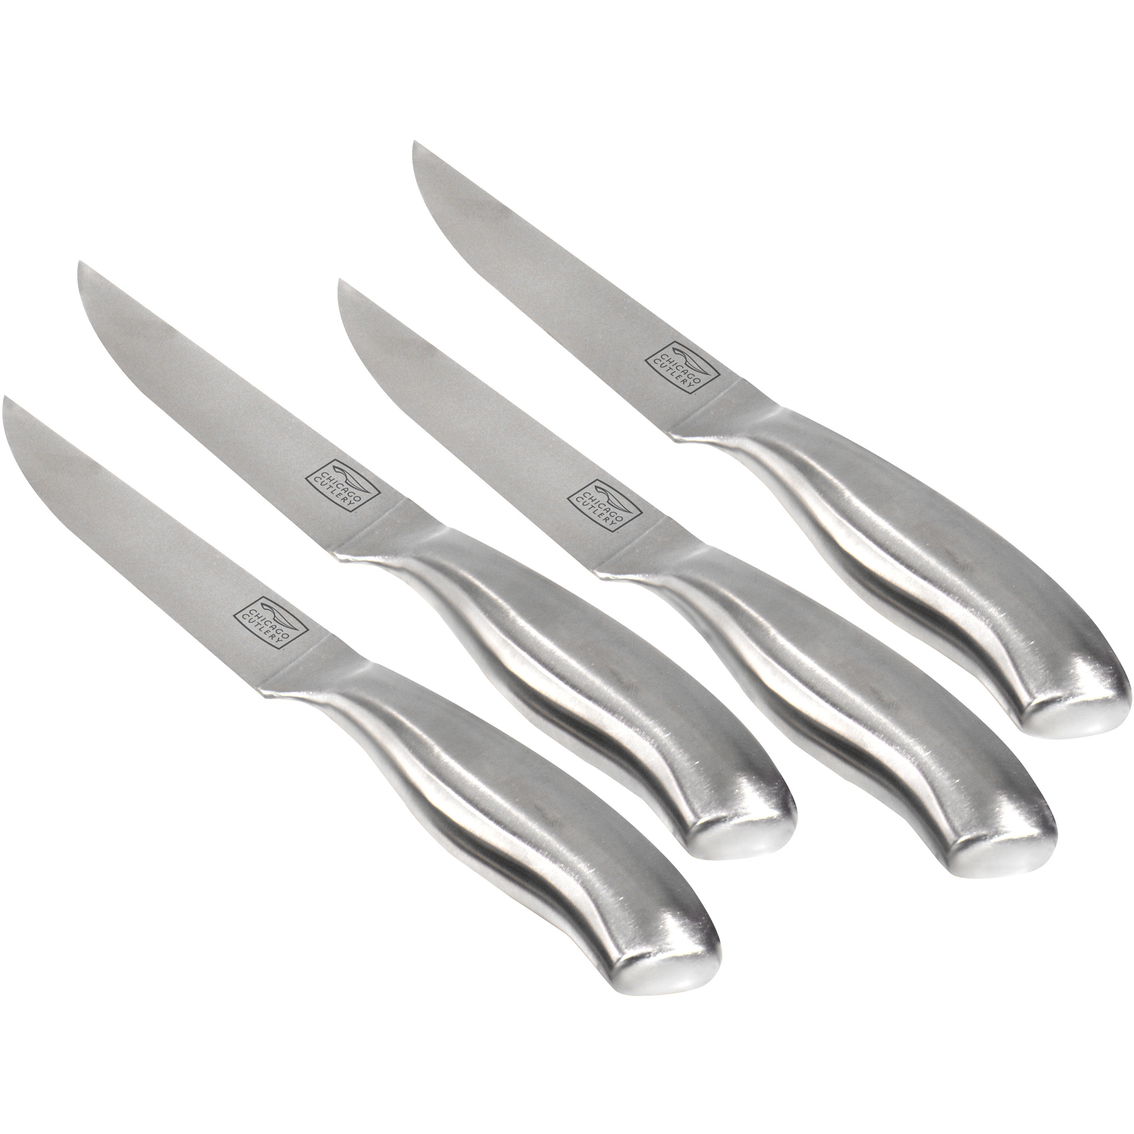 Chicago Cutlery Basics Steakhouse Steak Knife Set (4-Piece